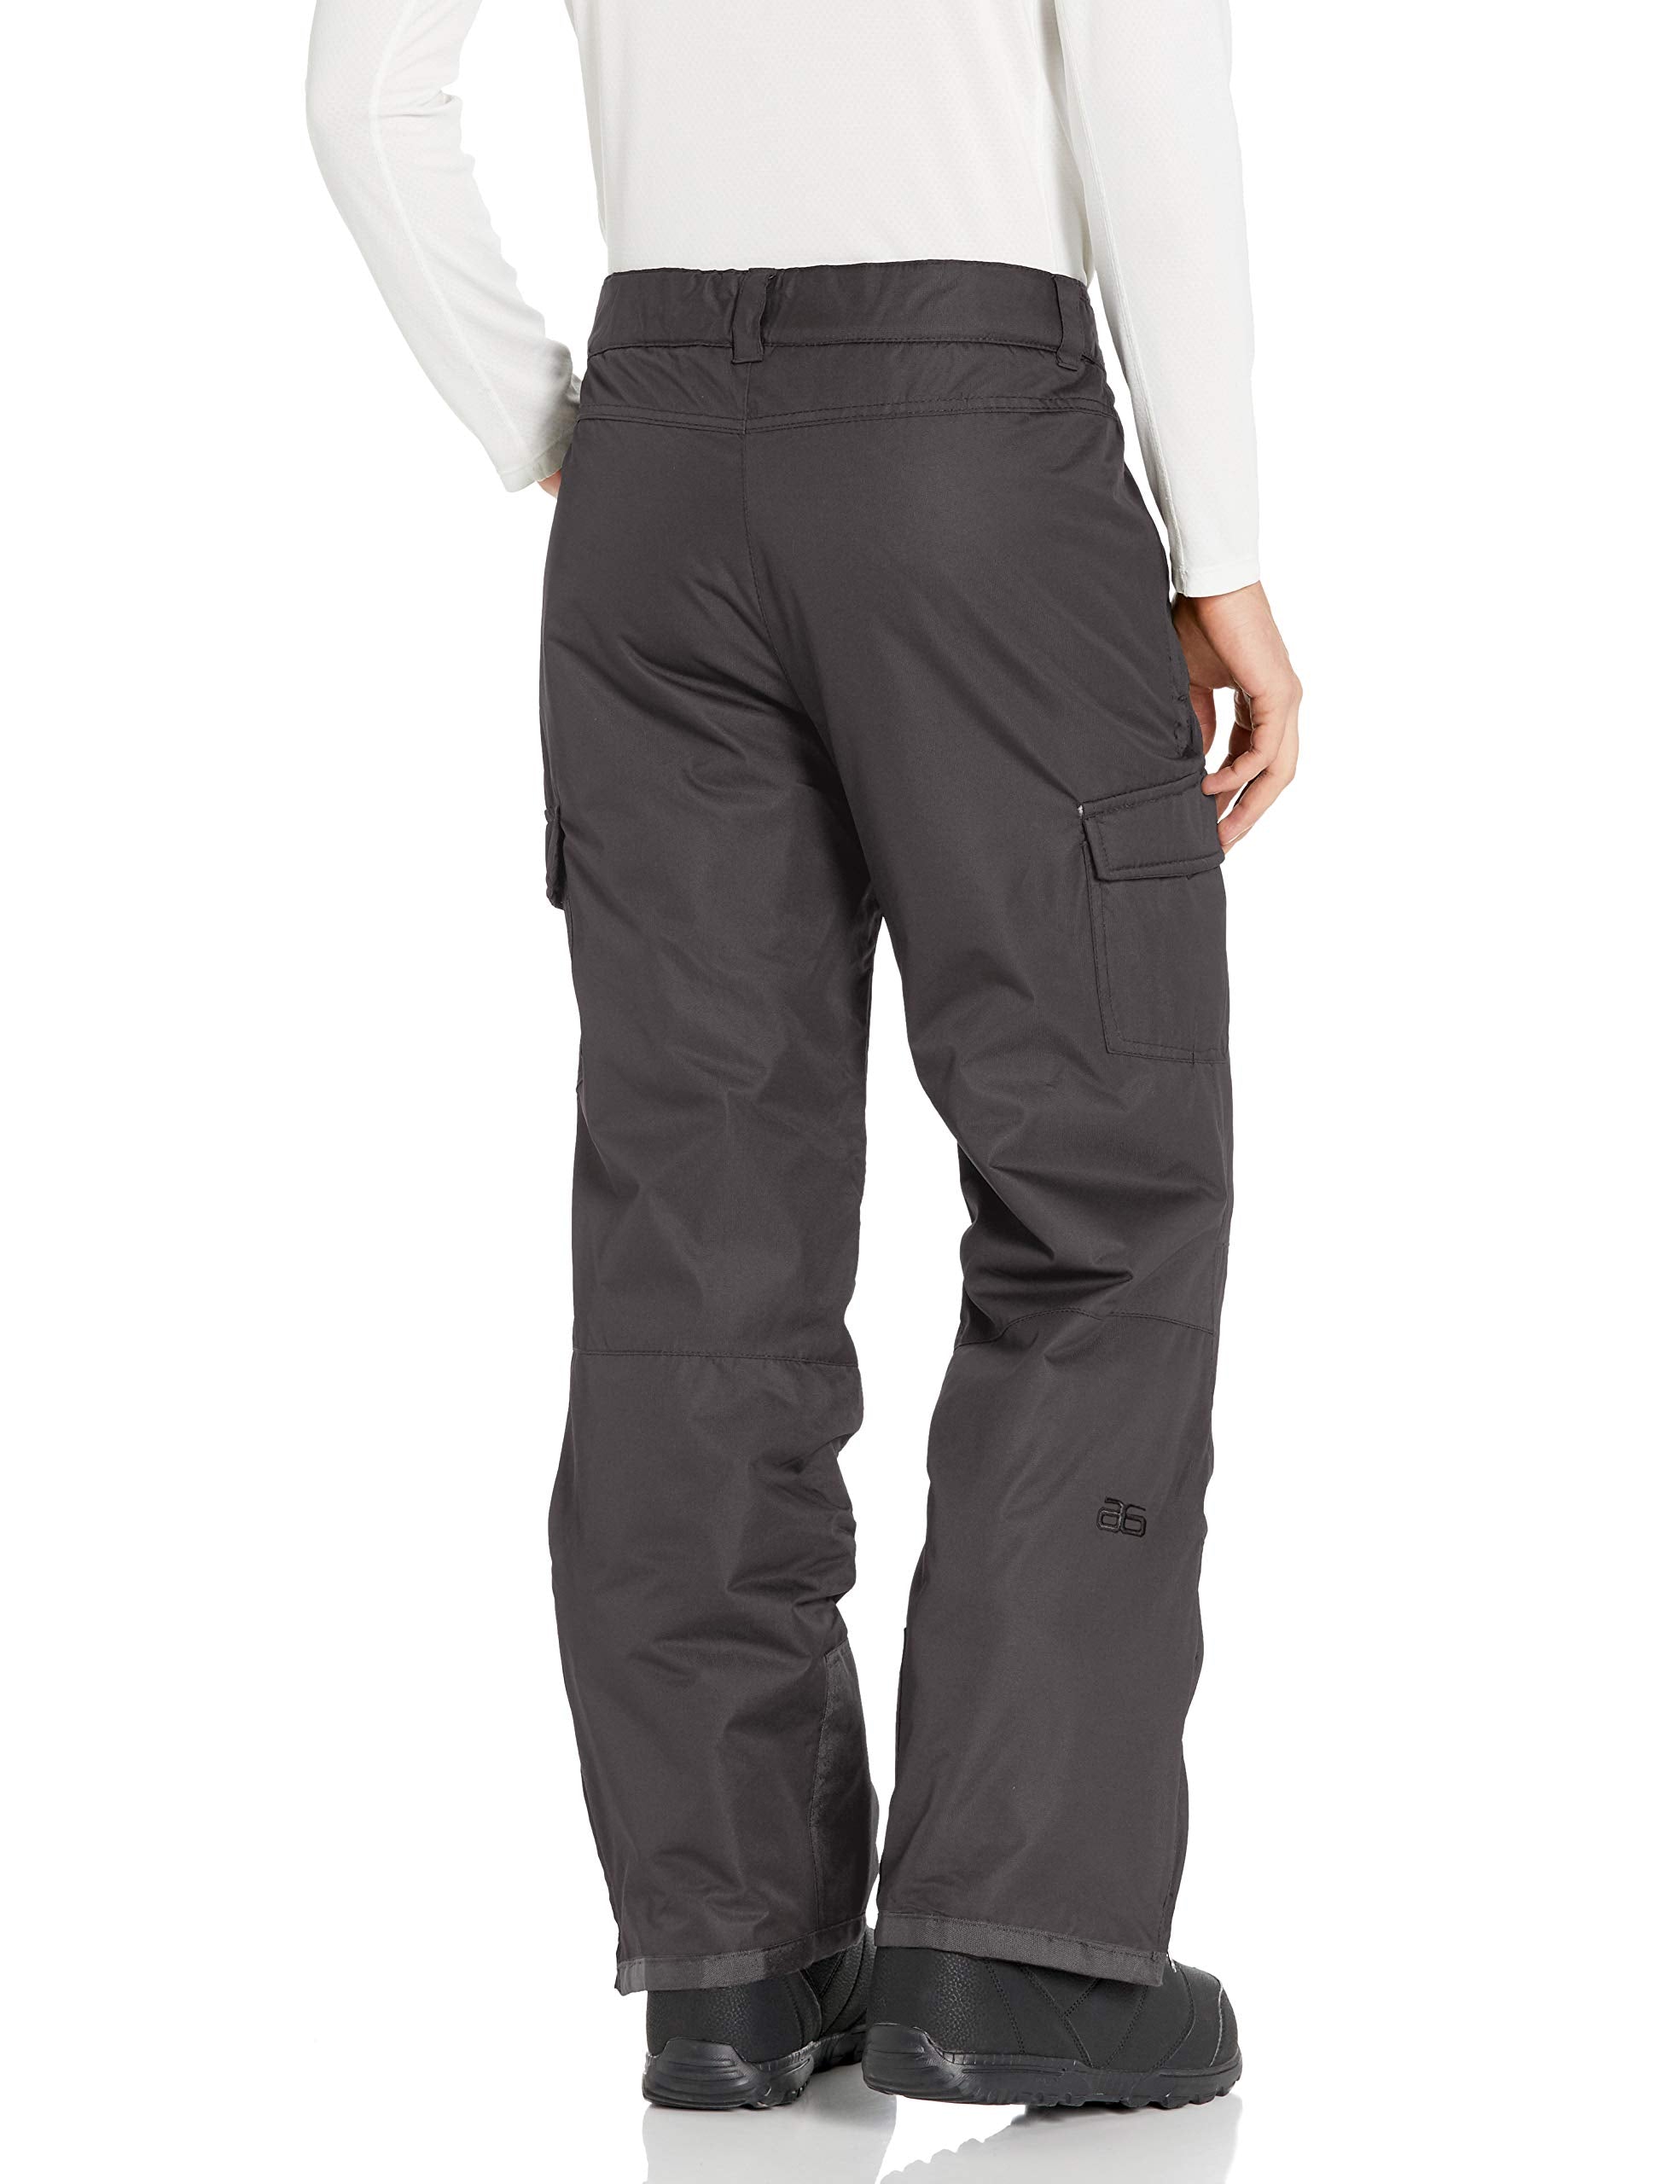 SkiGear by Arctix Mens Essential Snow Pants Pant 34 Uganda